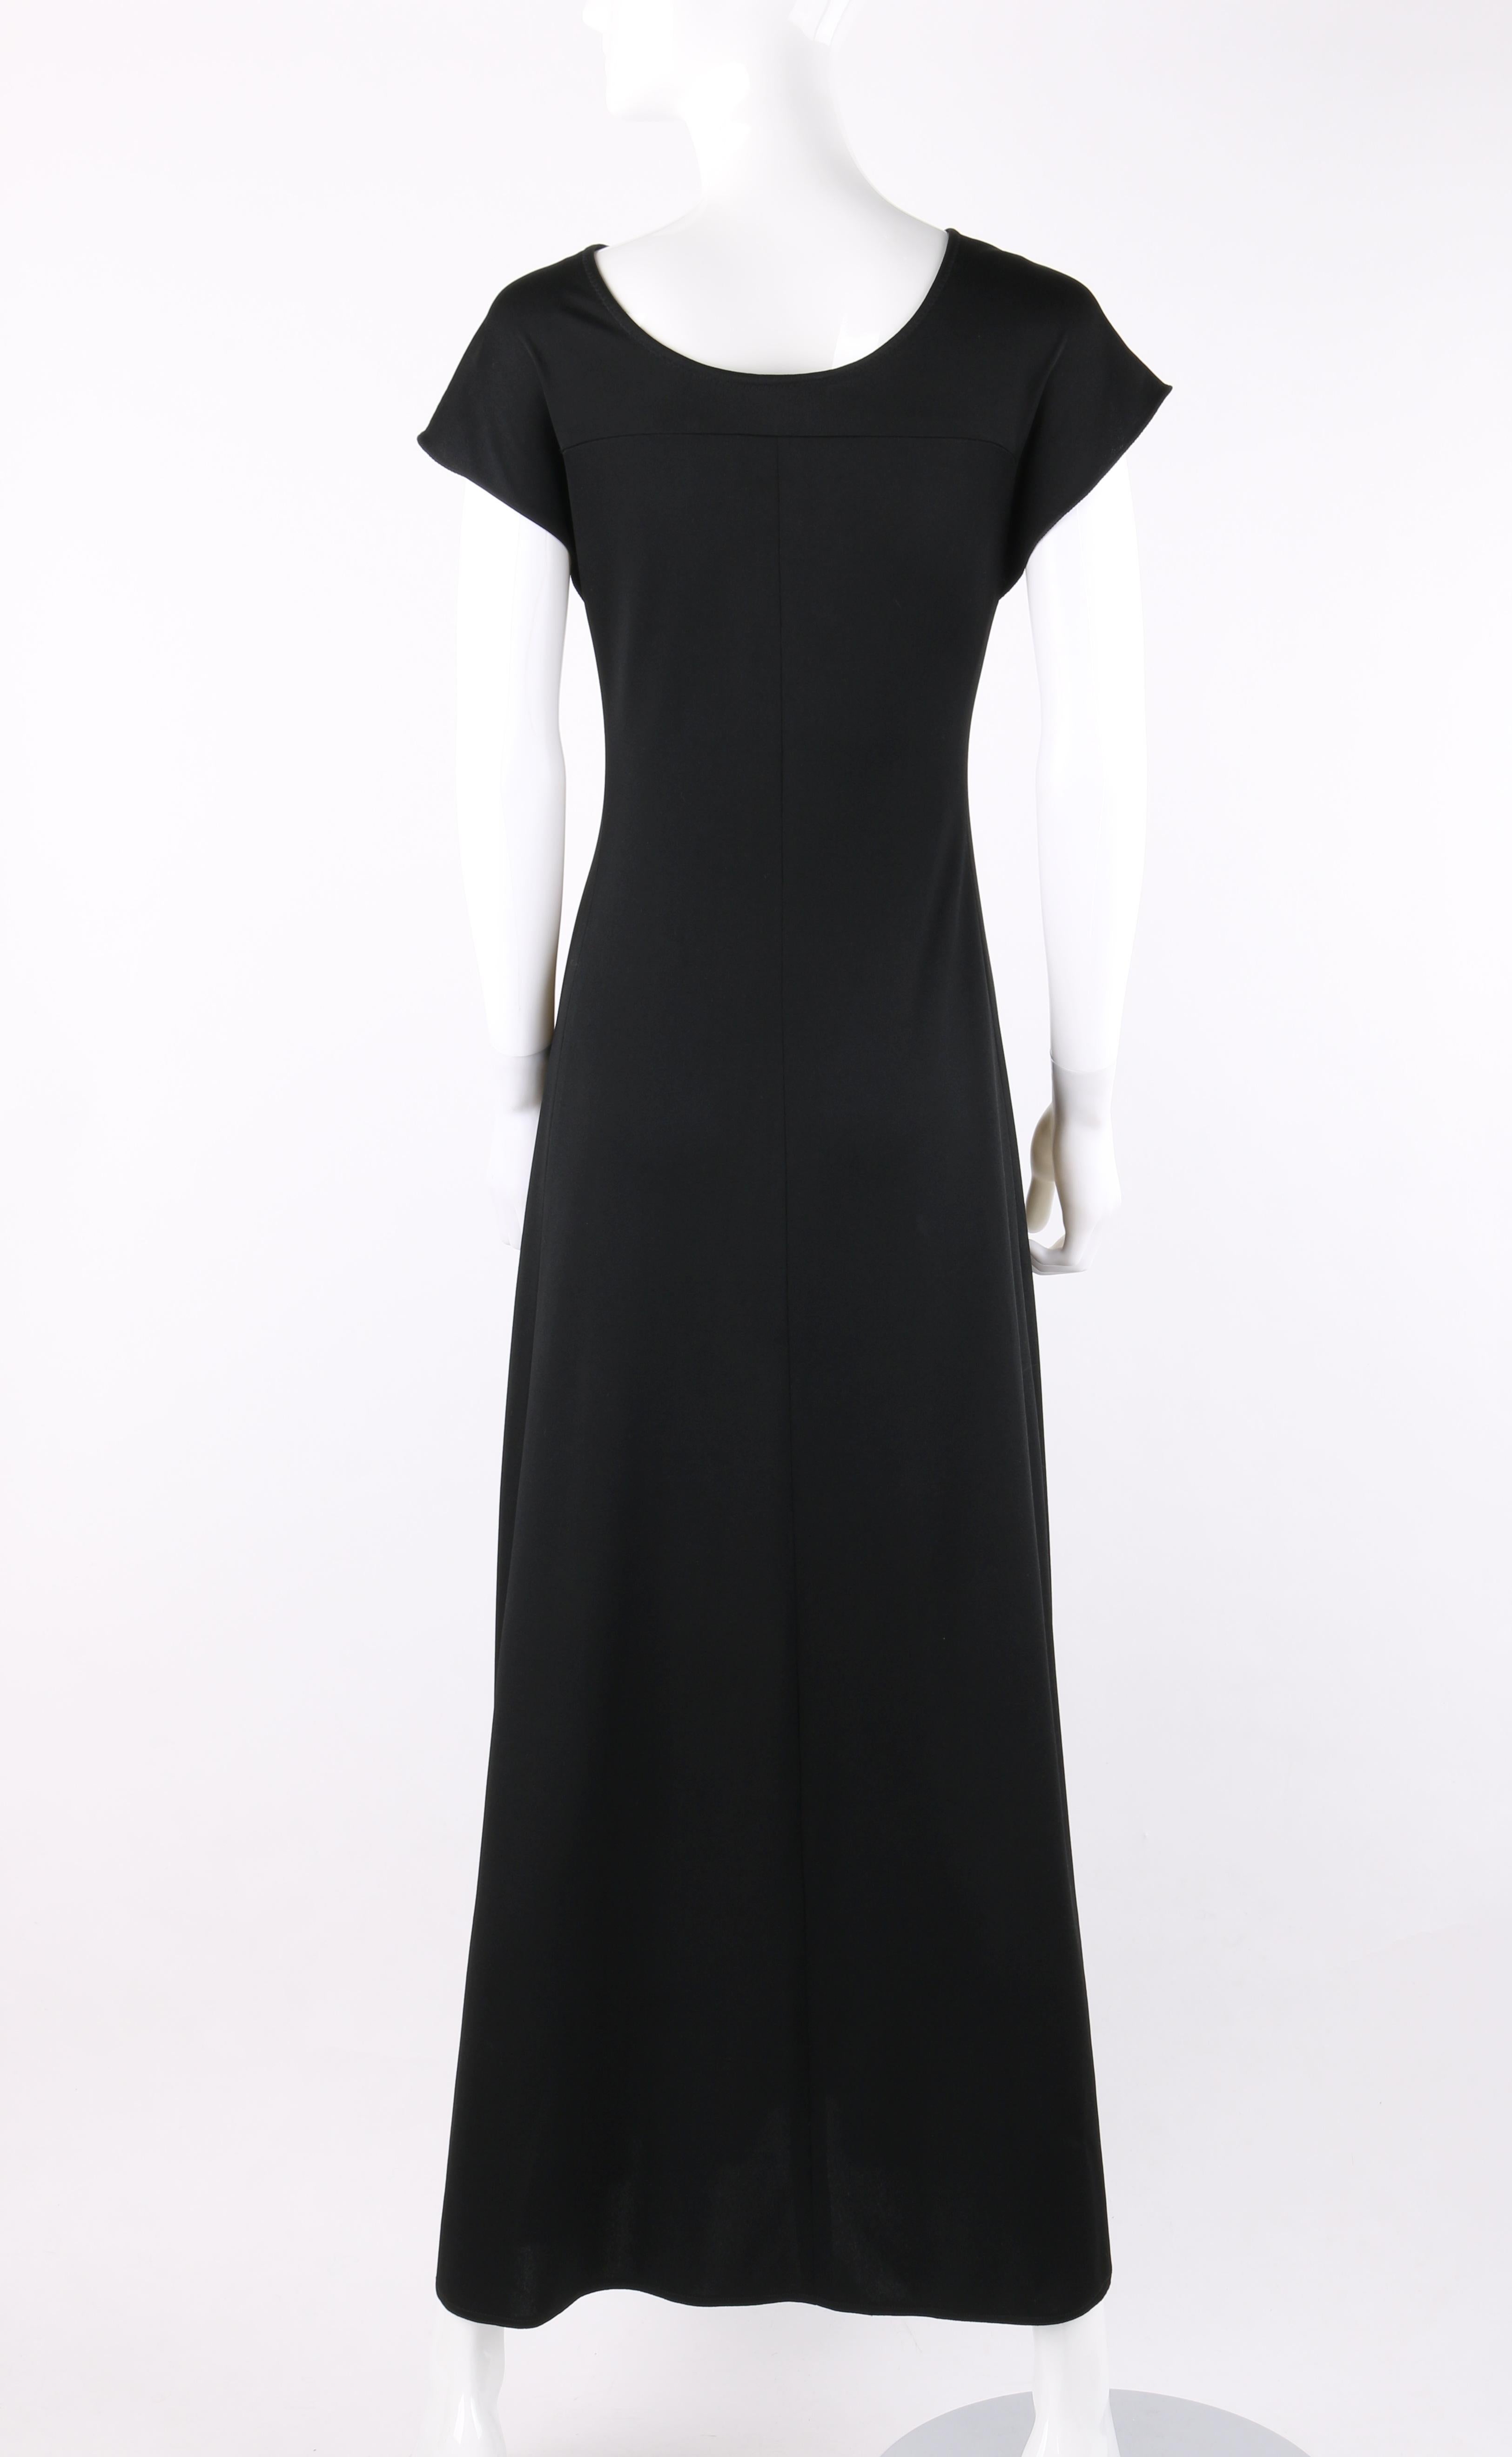 STEPHEN BURROWS c.1970's Black Knit Bias Cut Peek-A-Boo Evening Dress 1